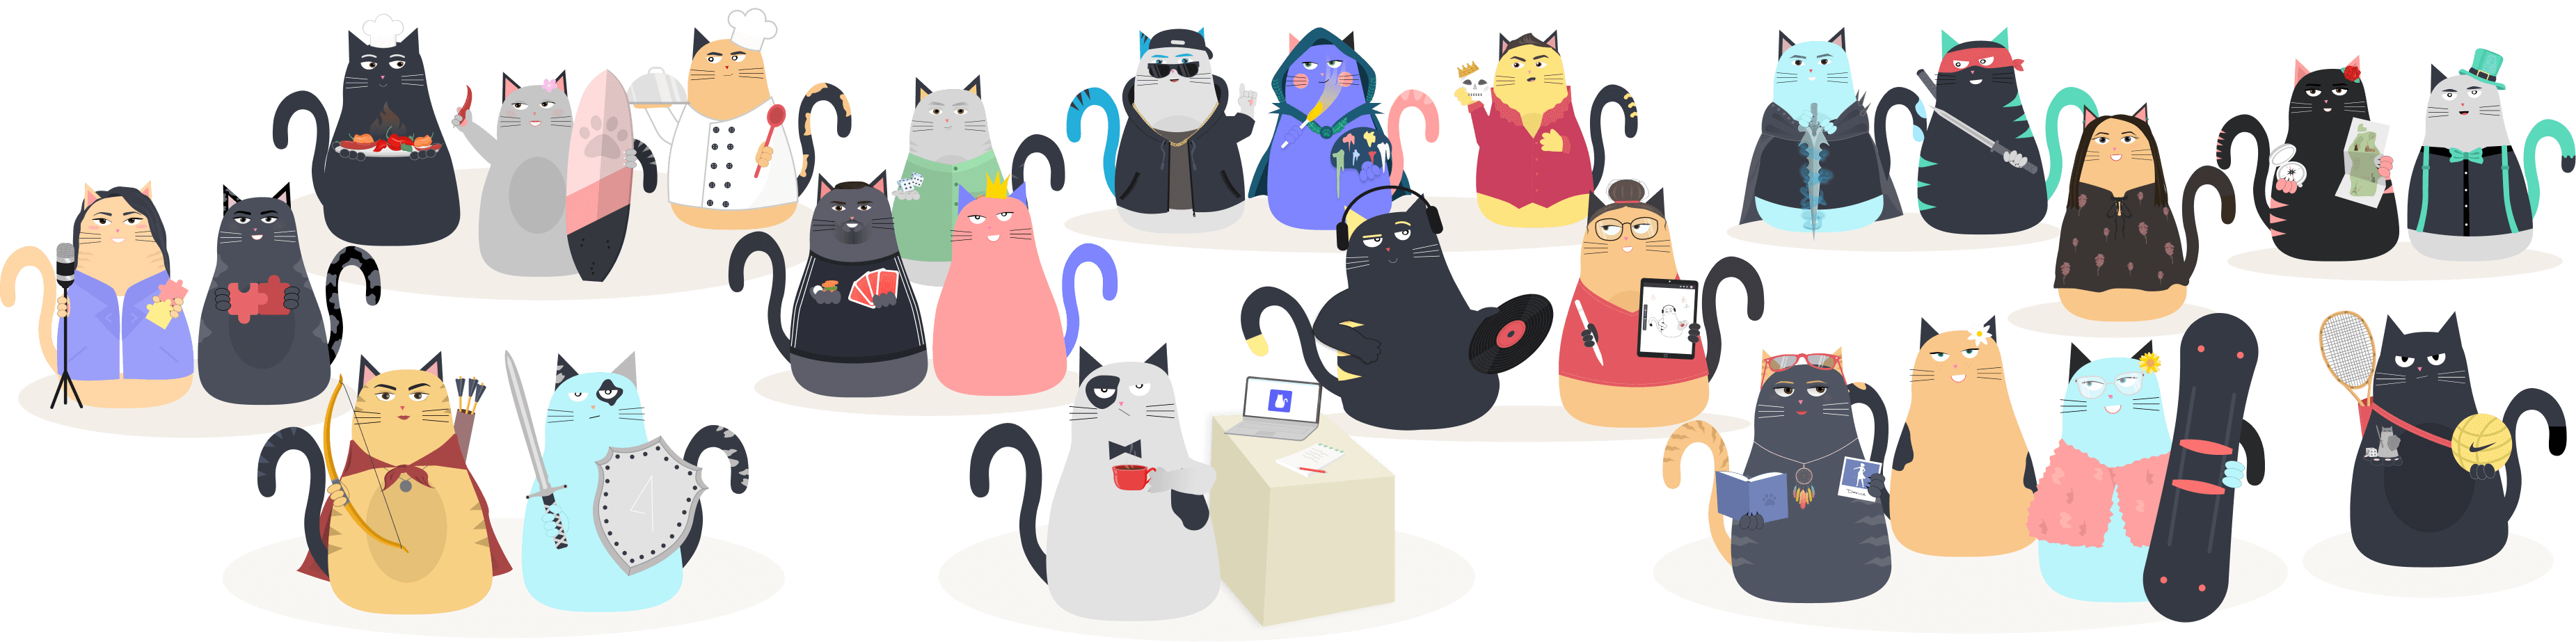 Many cat avatars on one place